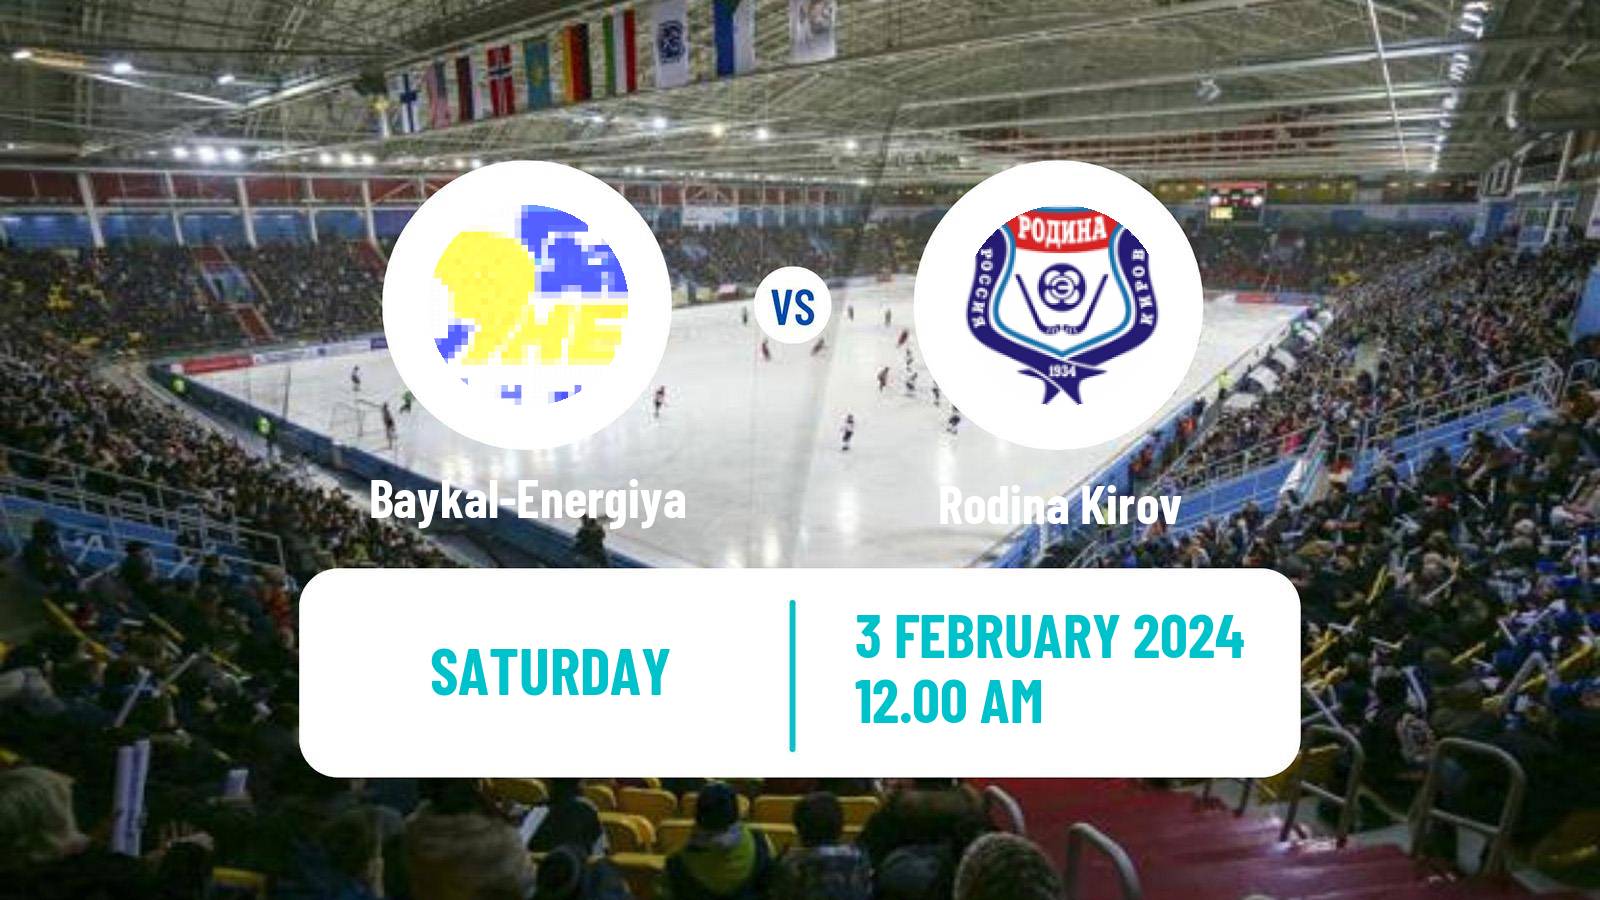 Bandy Russian Super League Bandy Baykal-Energiya - Rodina